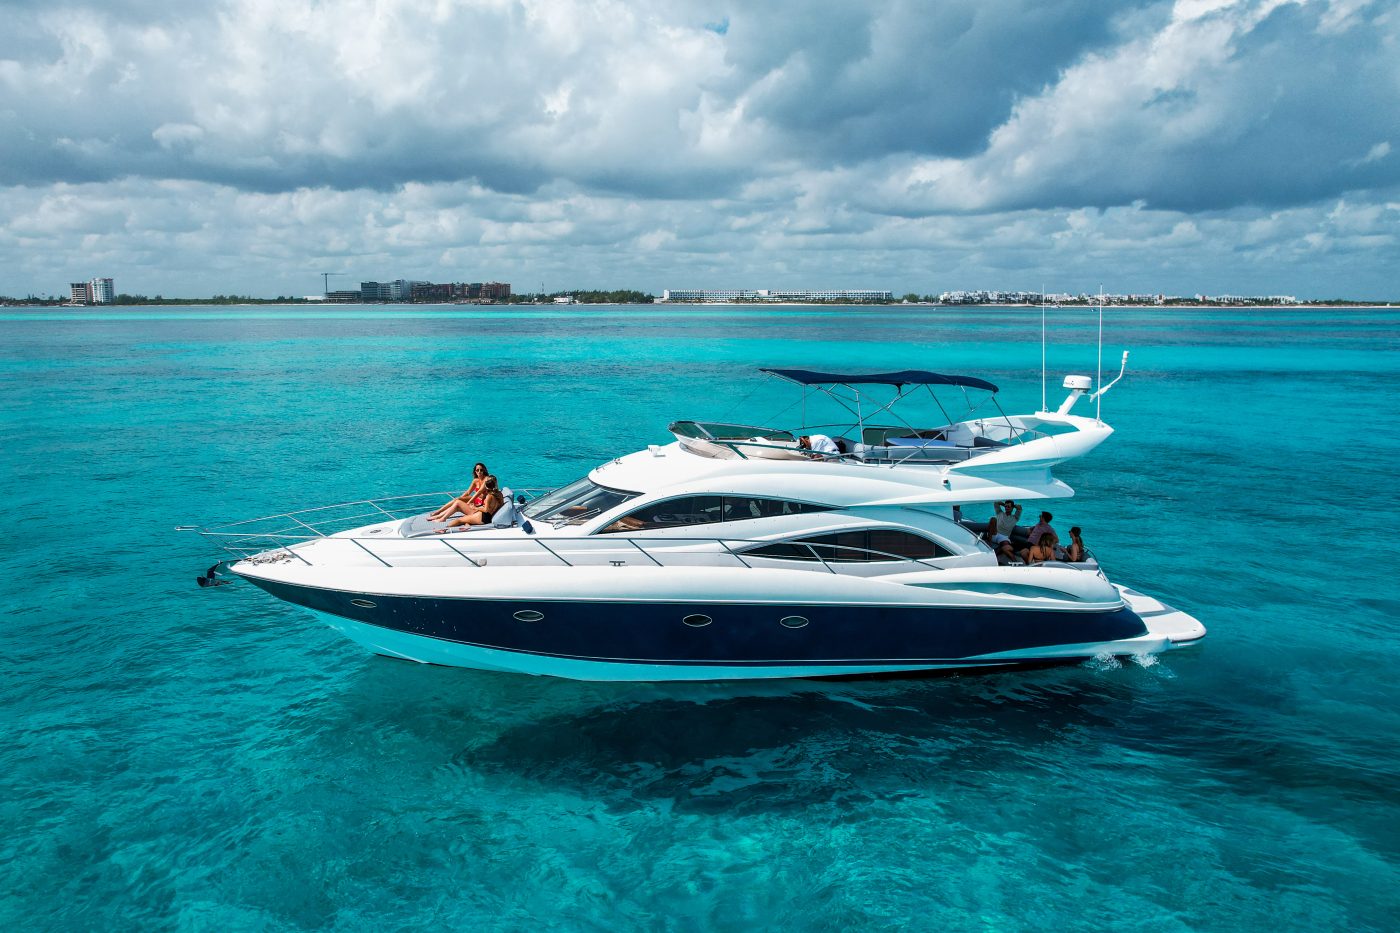 Sunseeker Luxury Yacht Charters to Cozumel, Isla Mujeres and Cancun Tulum